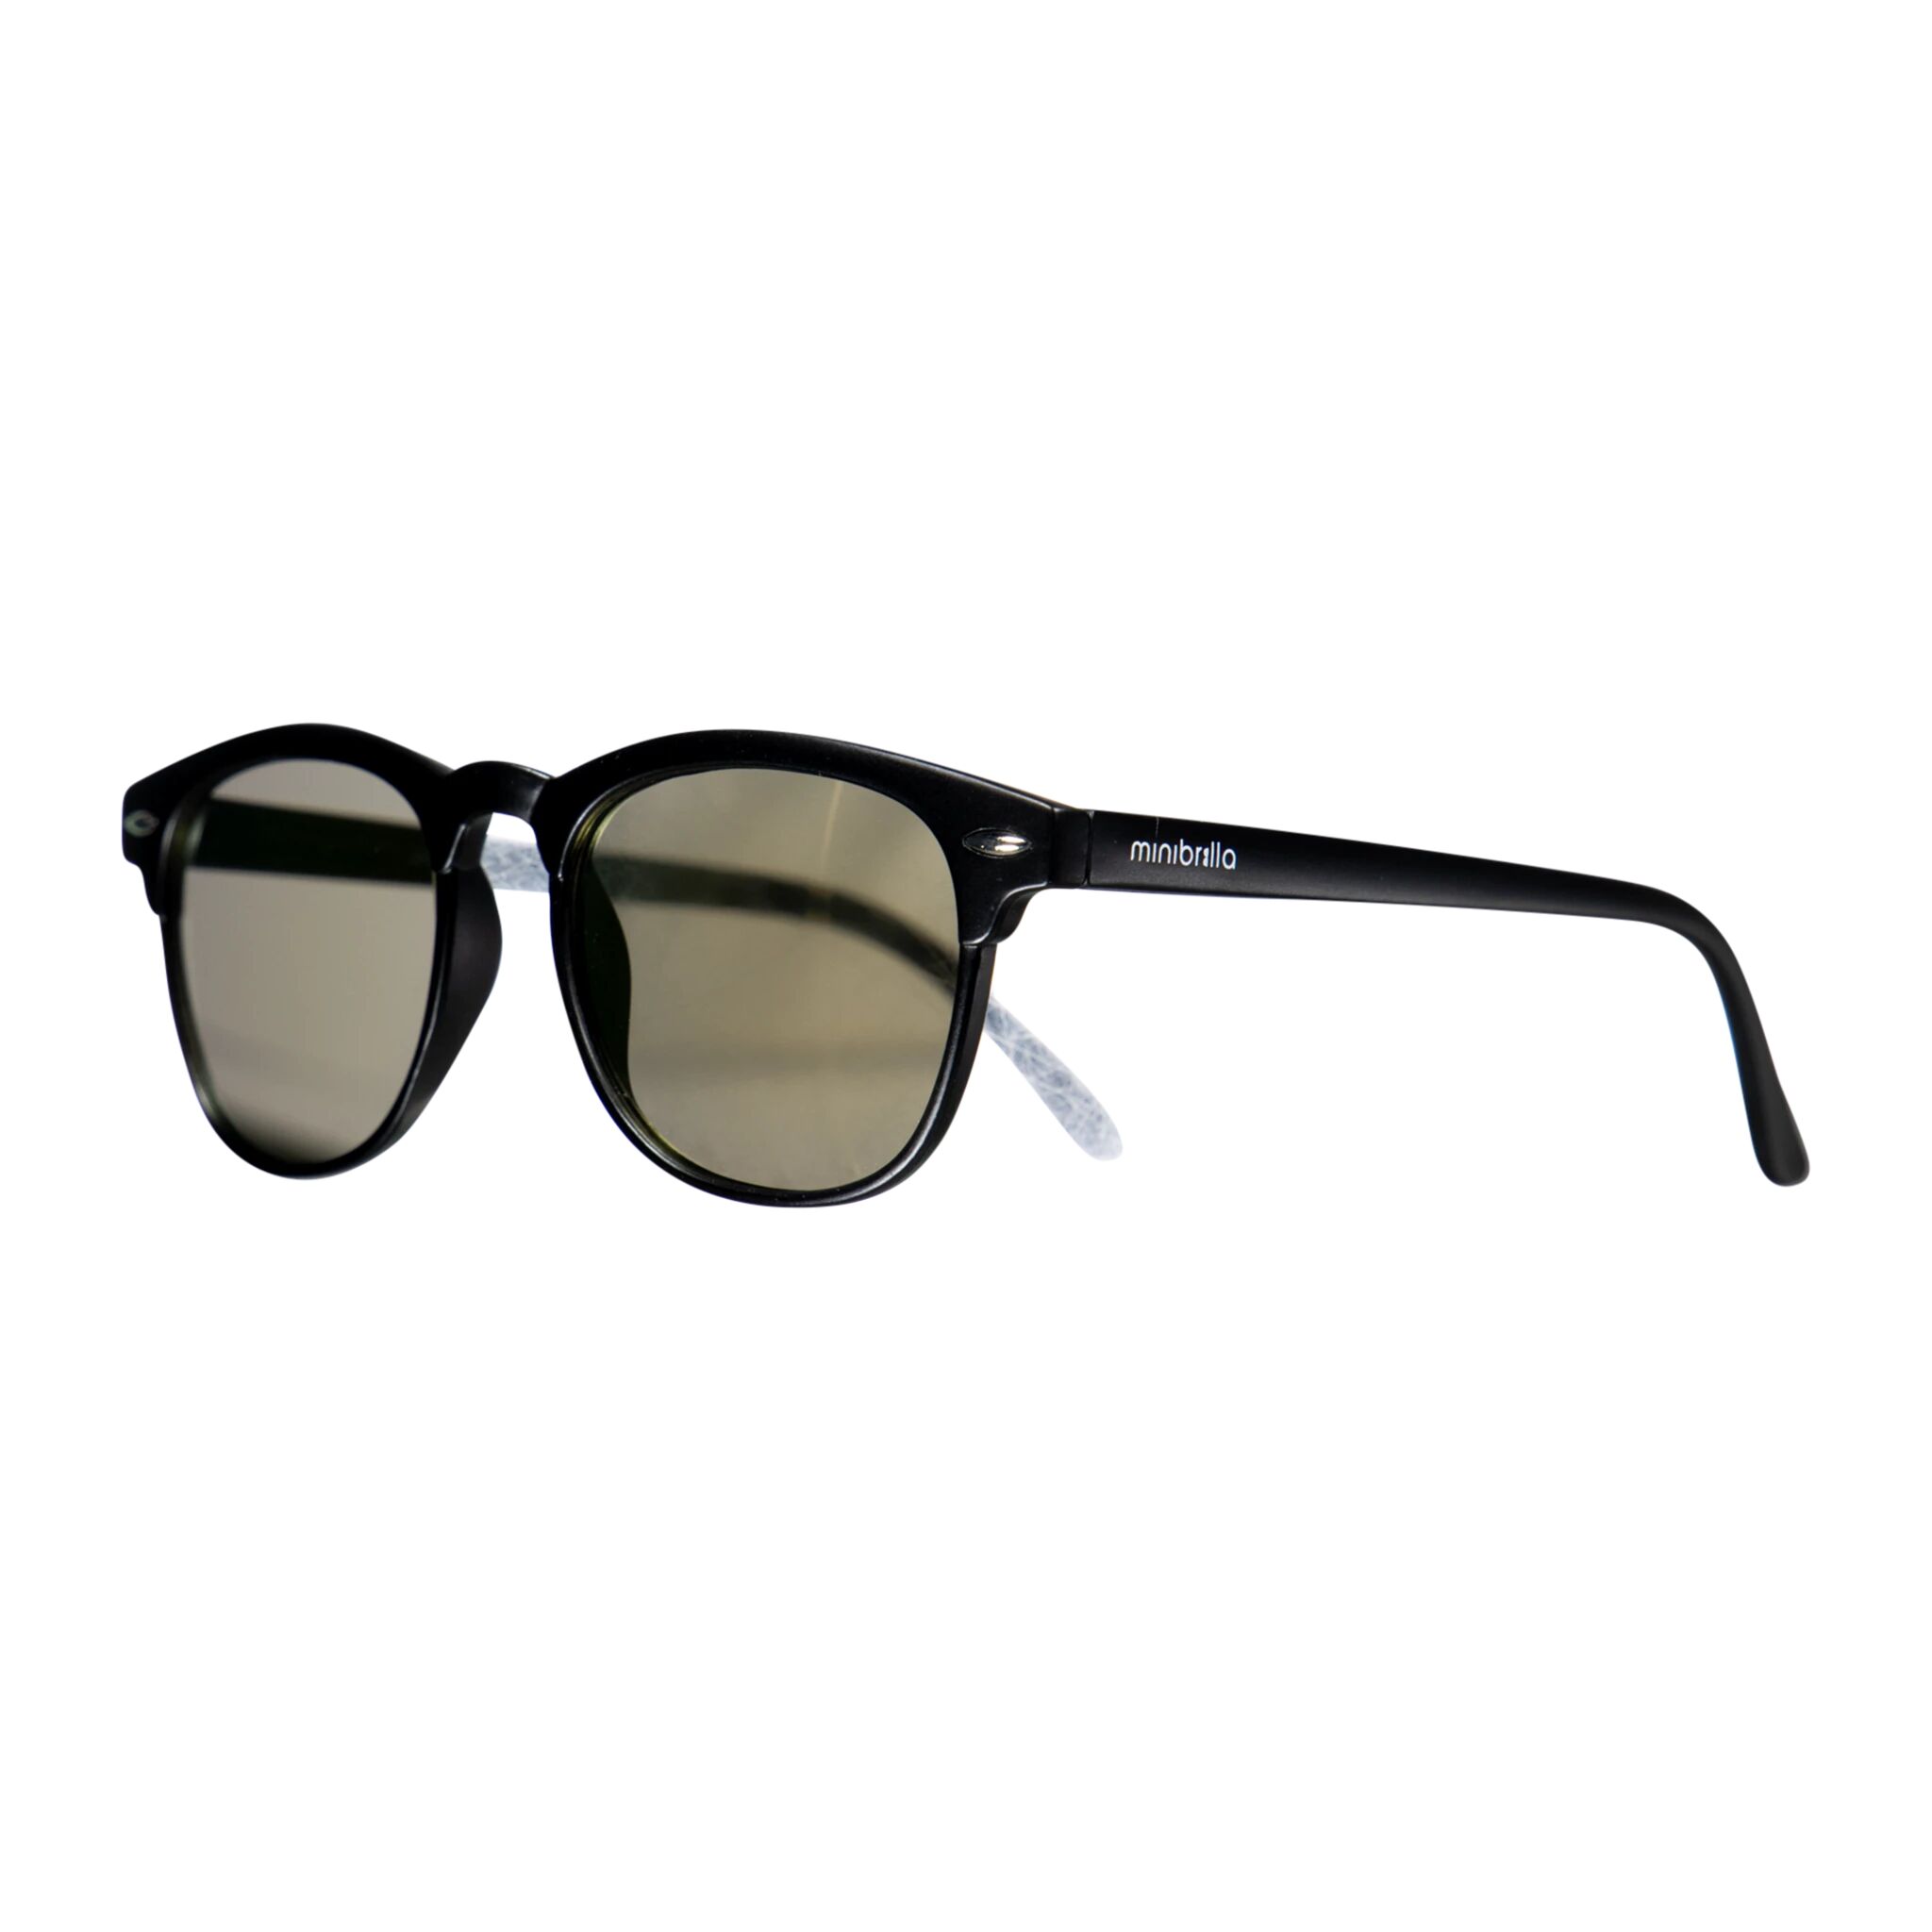 Minibrilla, solbrille for små barn M Black/Green lense